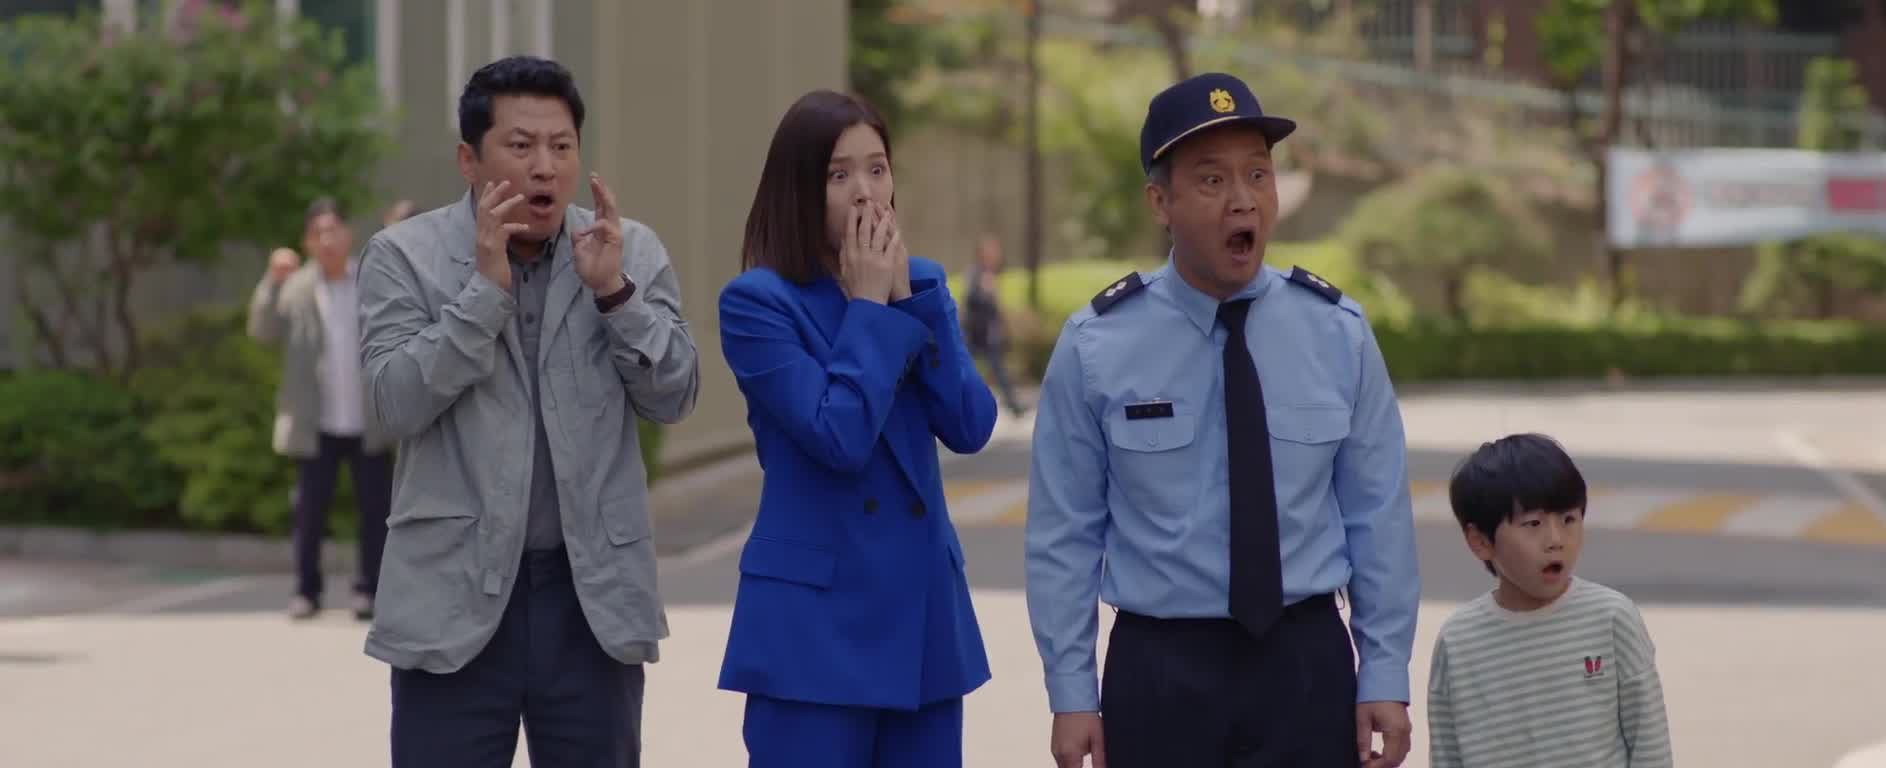 One Thousand Won Lawyer Episode 7 recap